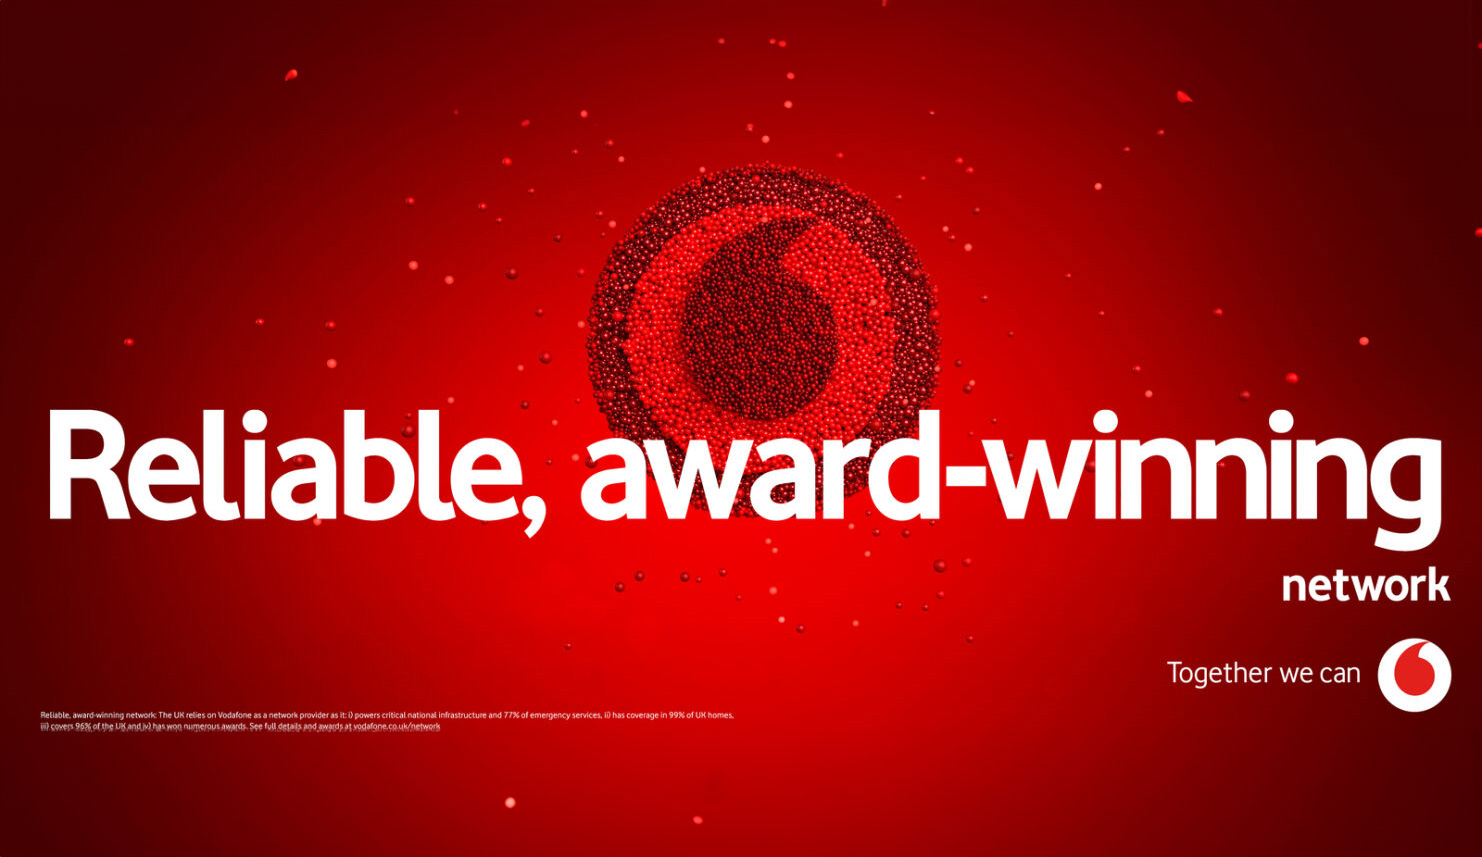 Relaible award winning network- Vodafone. 